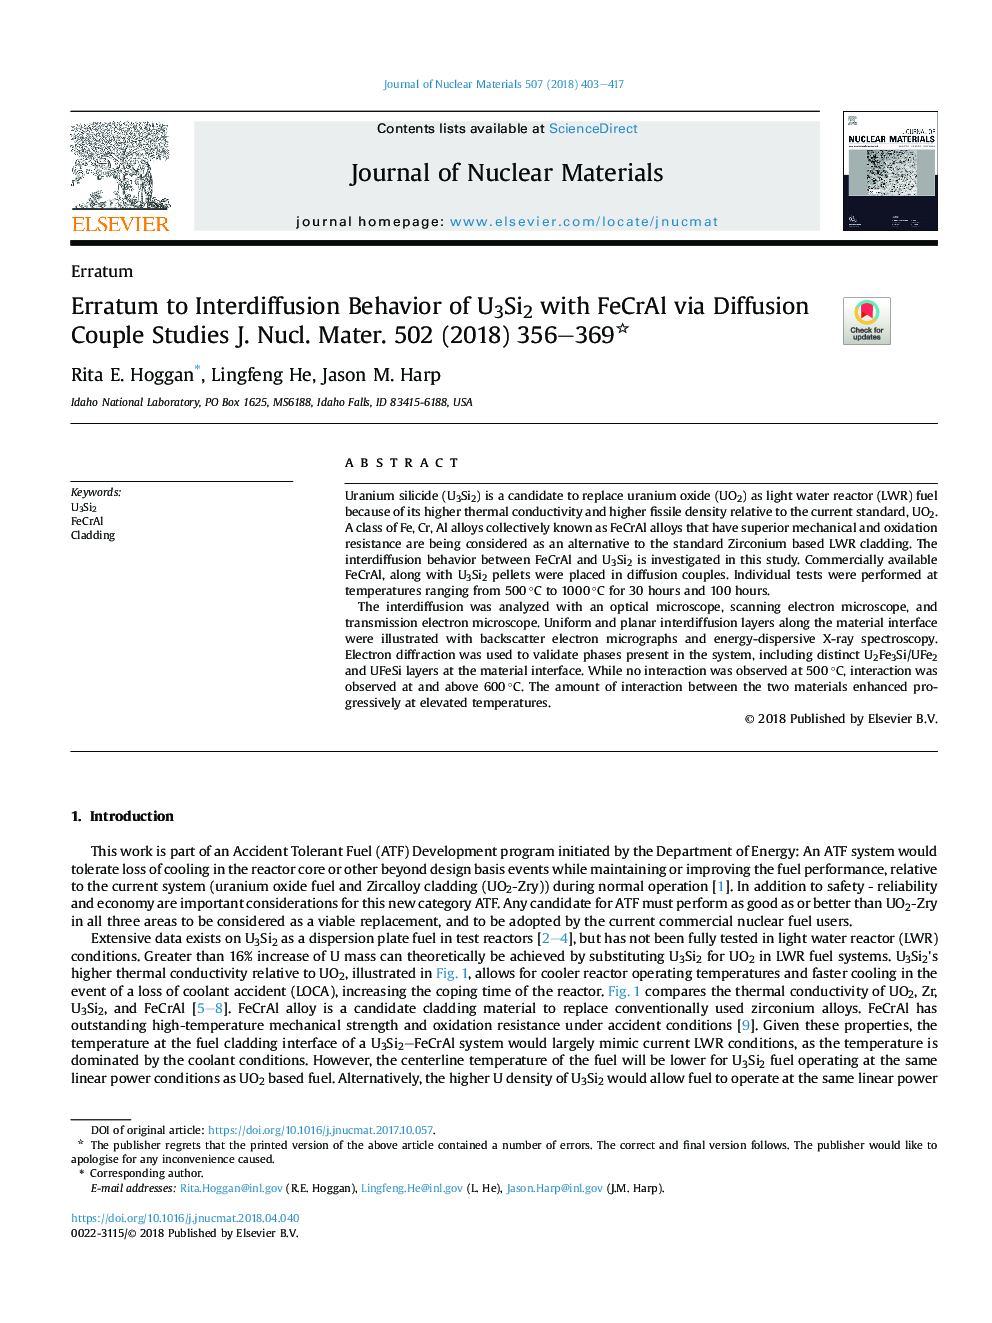 Erratum to Interdiffusion Behavior of U3Si2 with FeCrAl via Diffusion Couple Studies J. Nucl. Mater. 502 (2018) 356-369